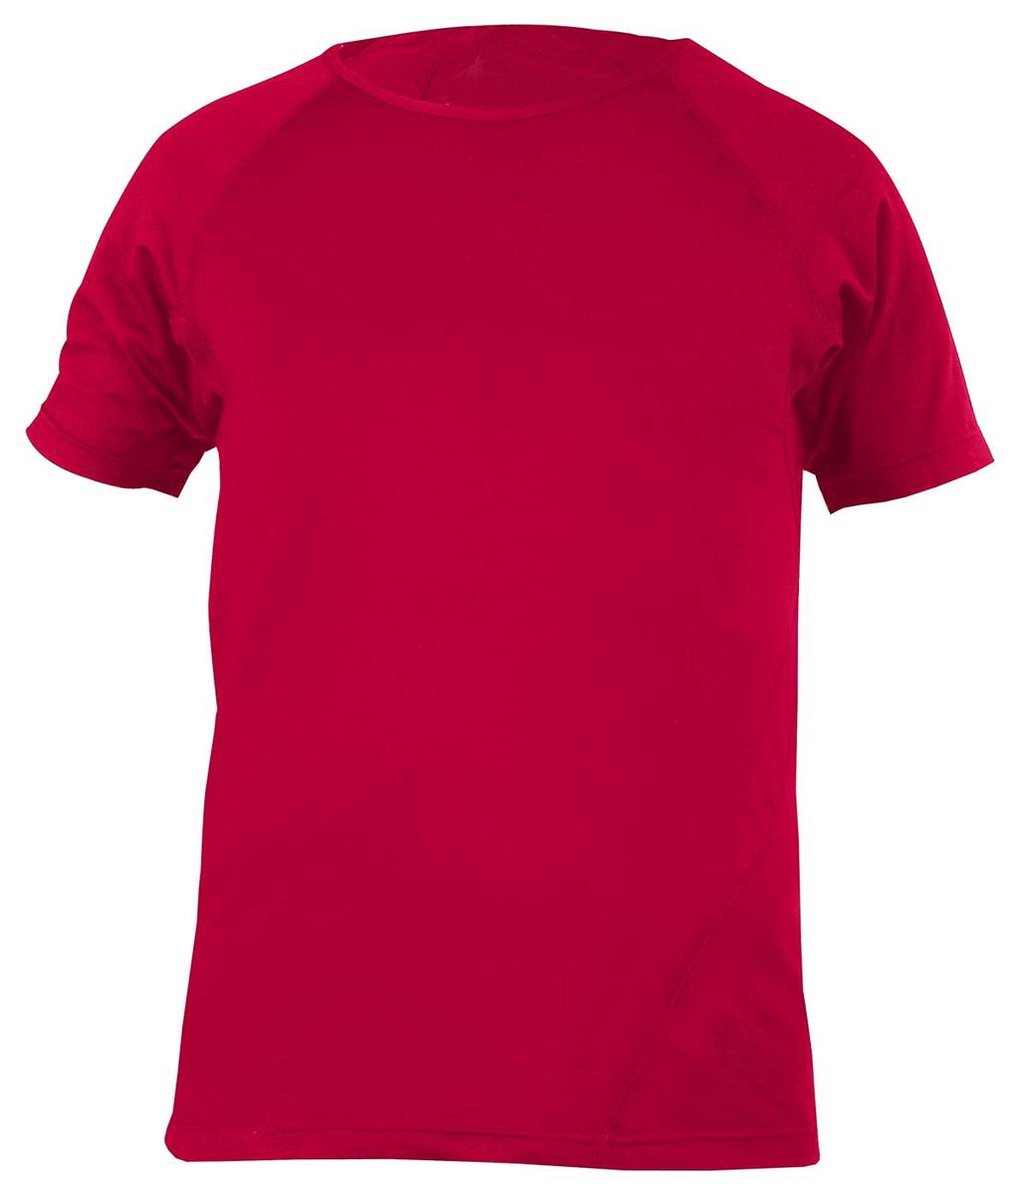 Yoga-T-Shirt, men - chili red M Loungewear shirt YOGISTAR